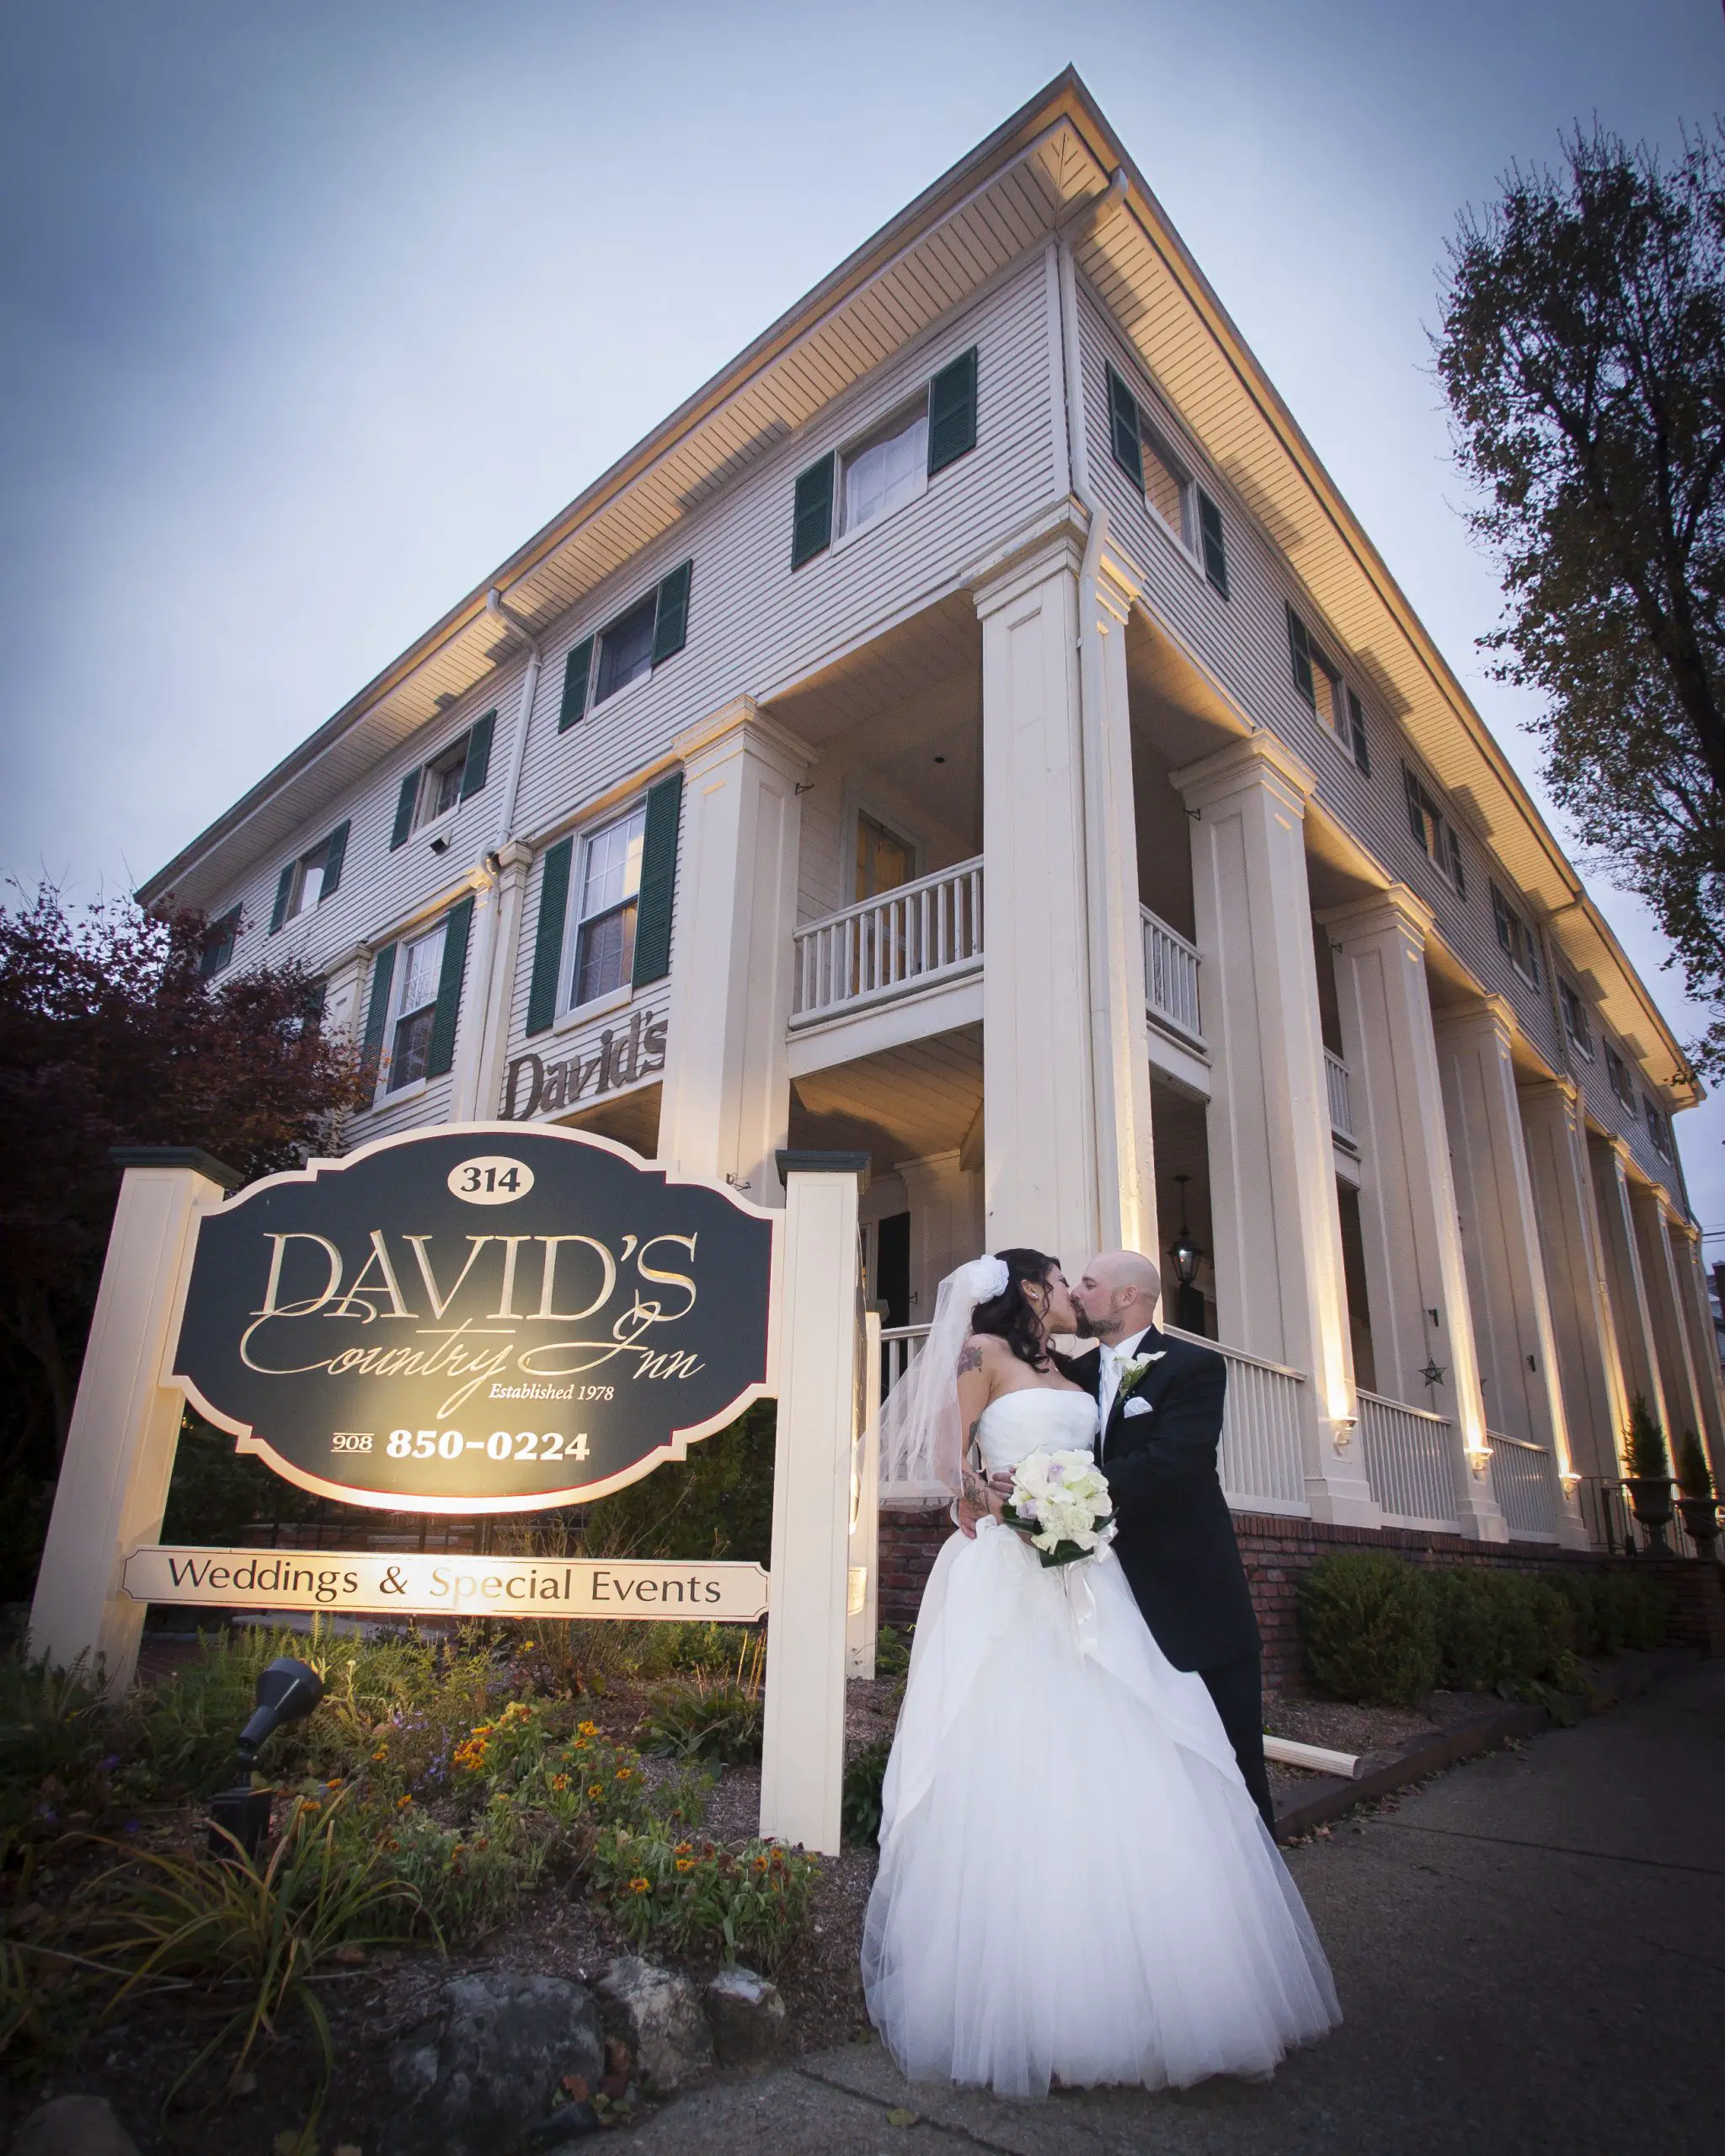 Davids Country Inn Wedding Venue in New Jersey